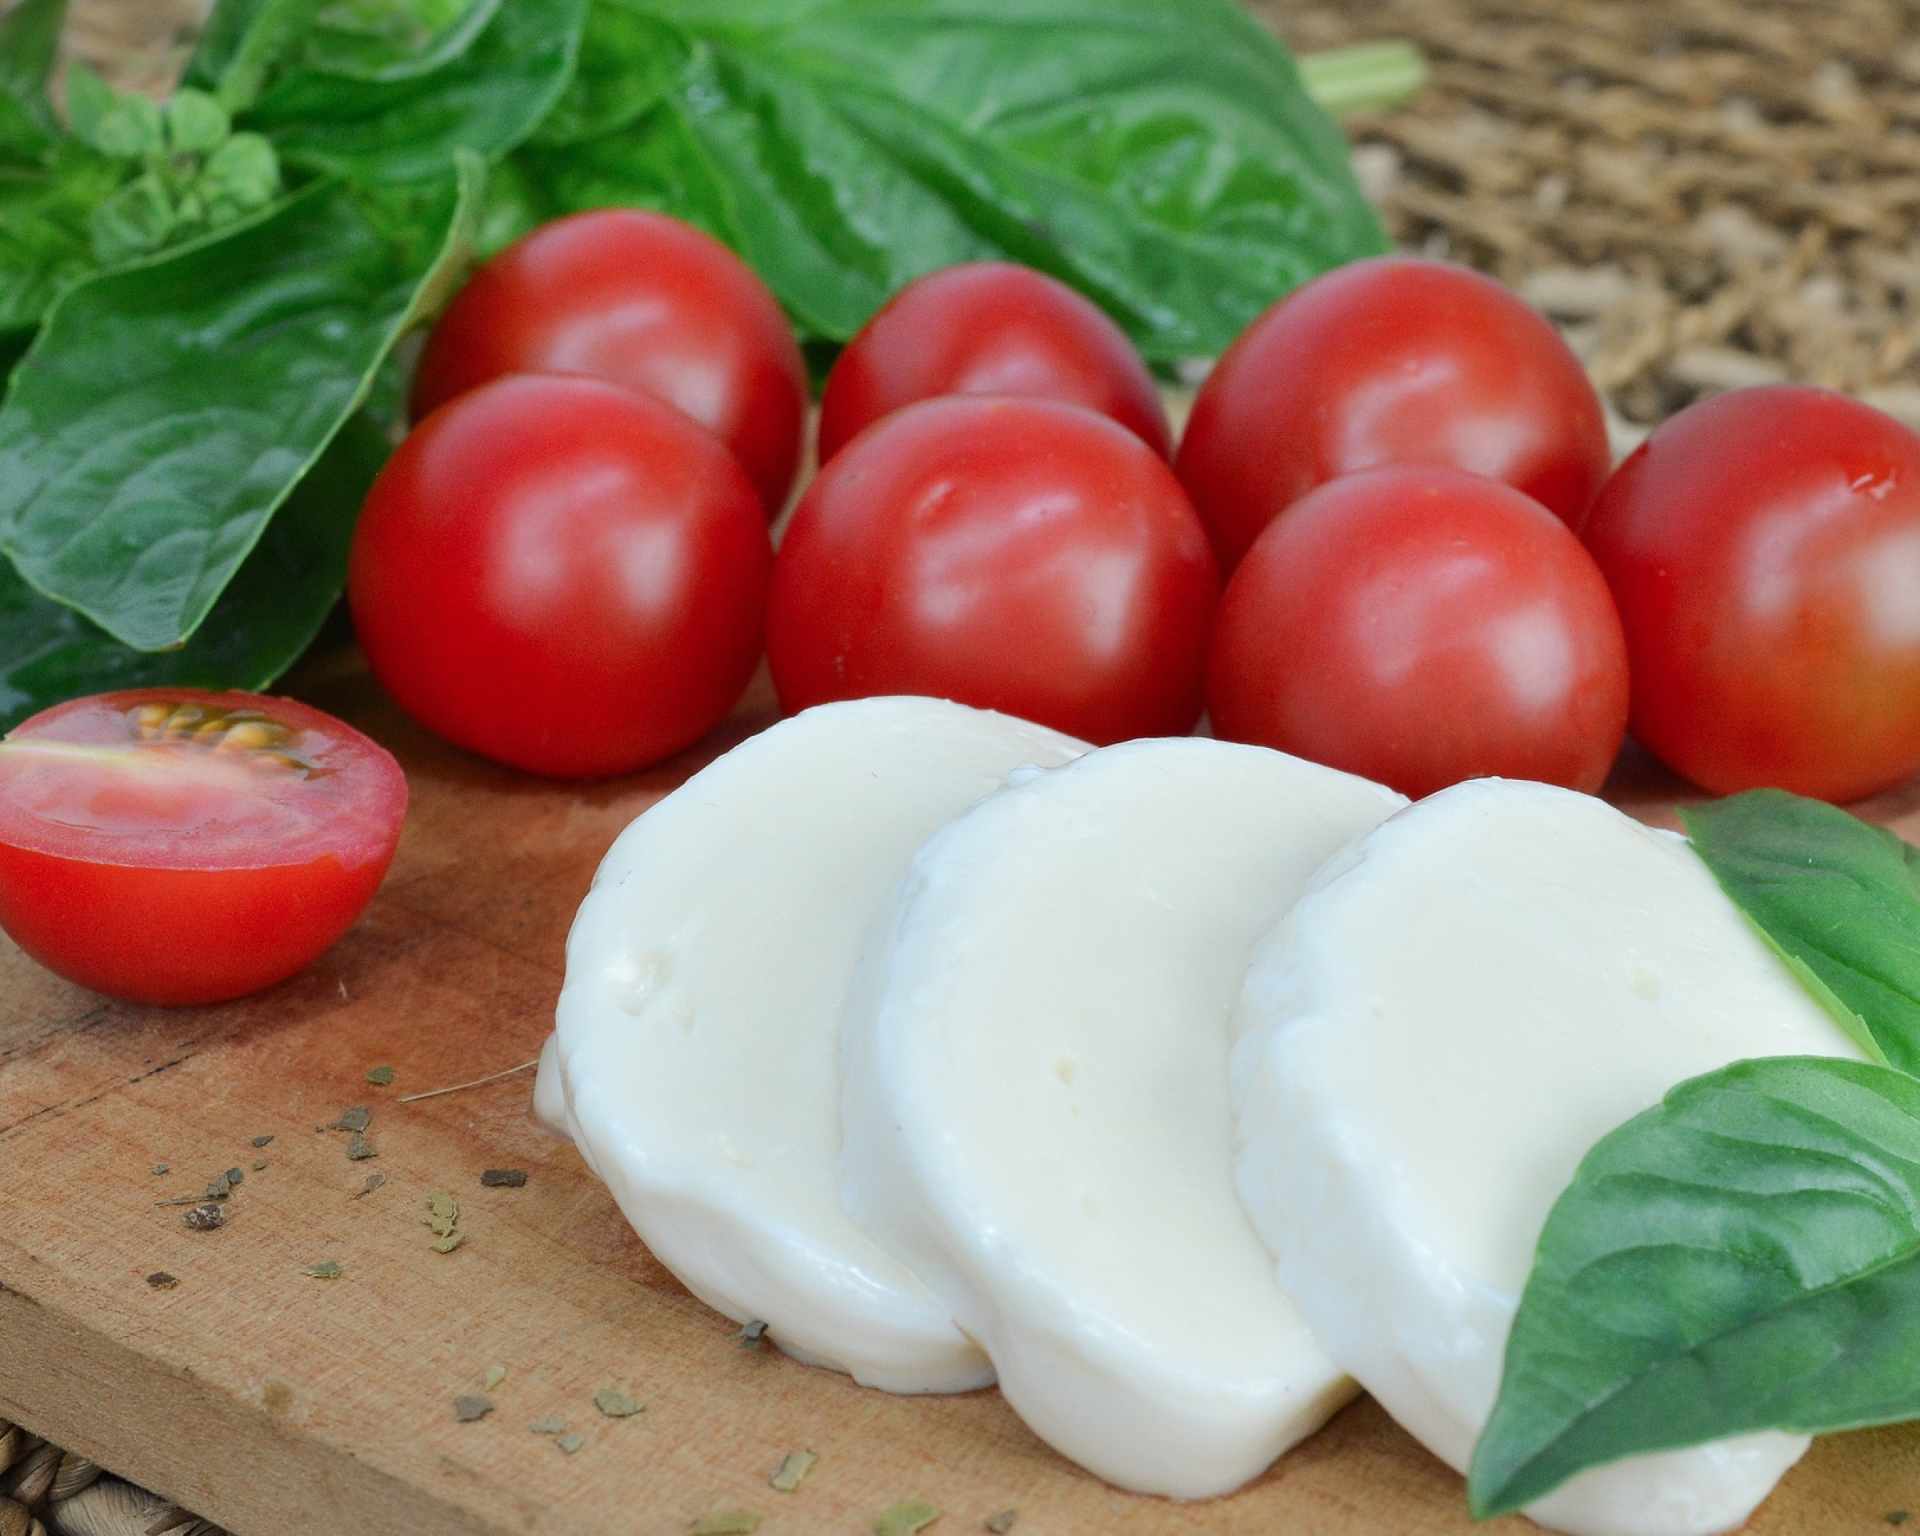 Mozzarella s paradajkami a bazalkou